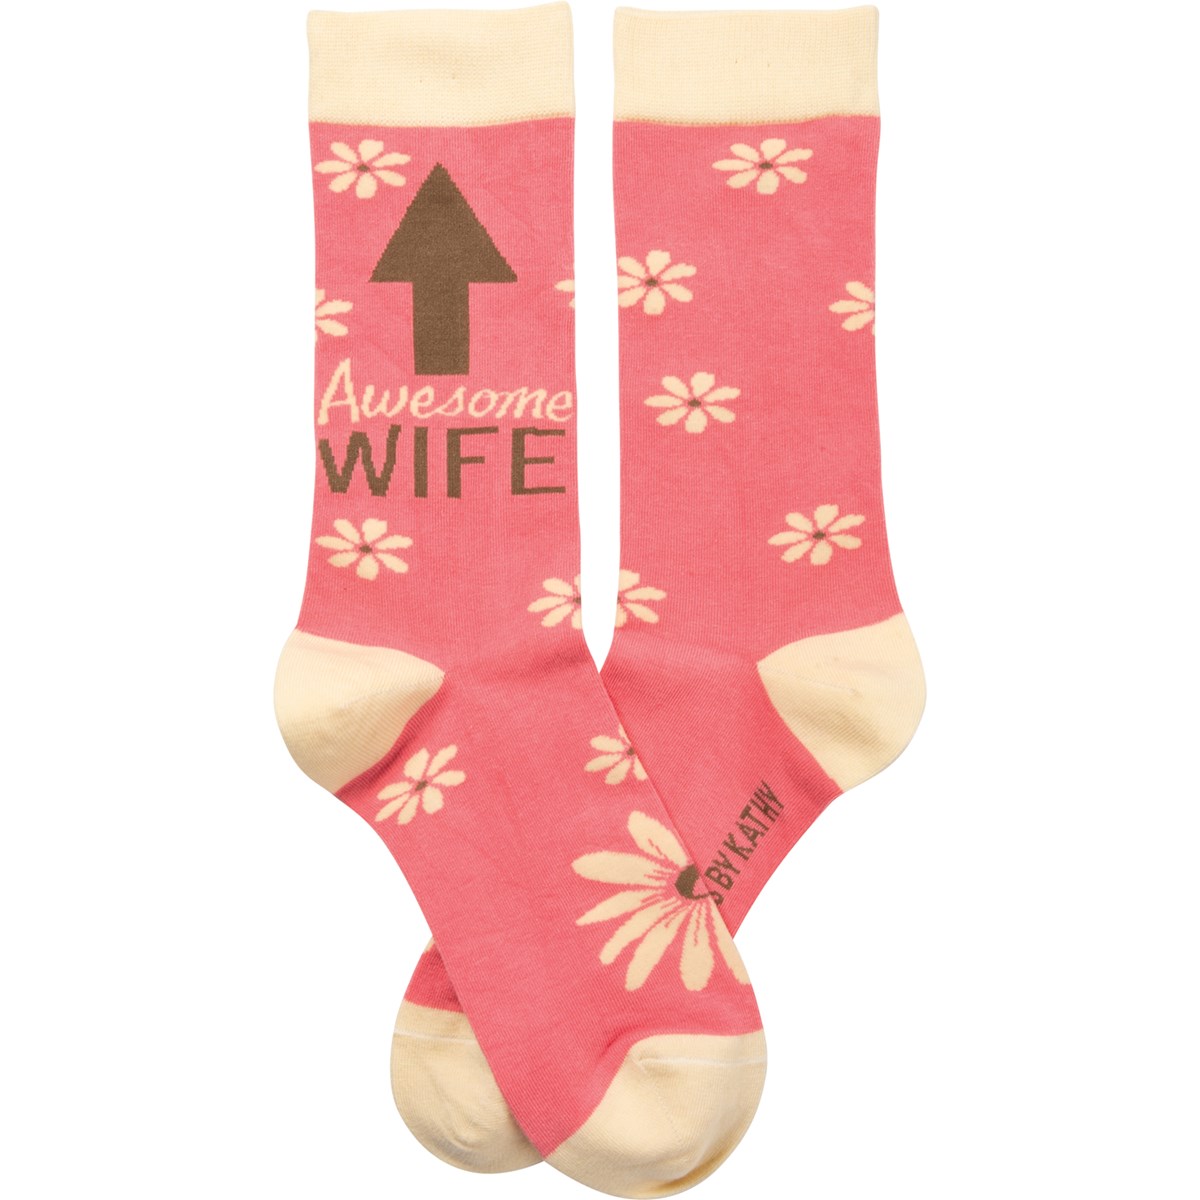 Awesome Wife Socks - Cotton, Nylon, Spandex